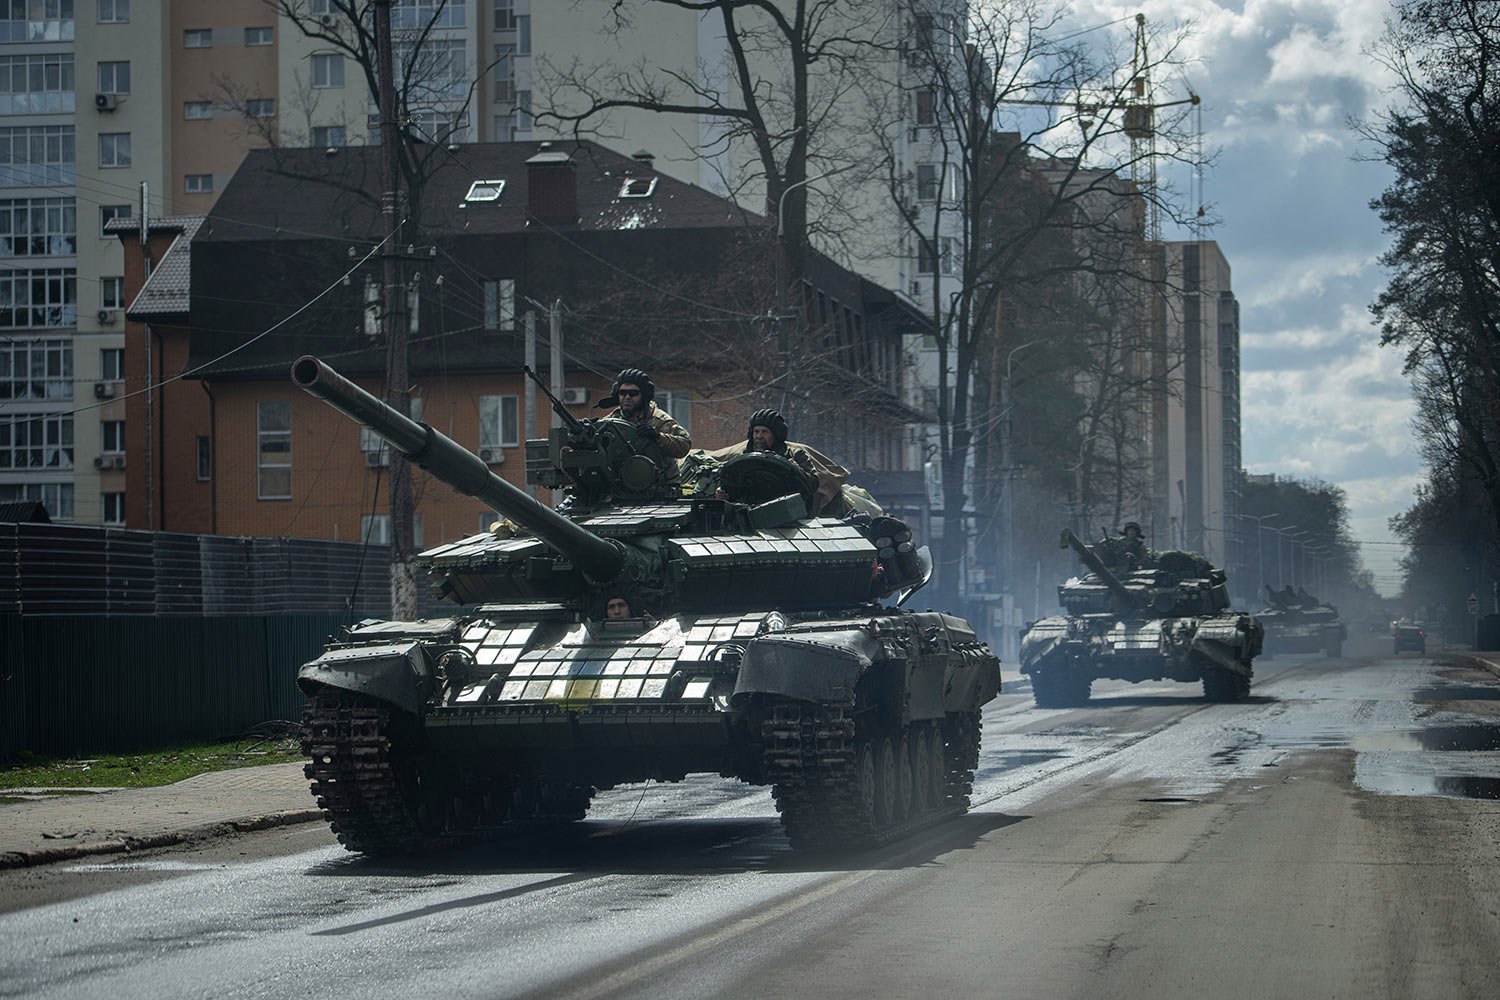  Ukrainian tanks move down a street in Irpin, on the outskirts of Kyiv, Ukraine, Monday, April 11, 2022. (AP Photo/Evgeniy Maloletka) 